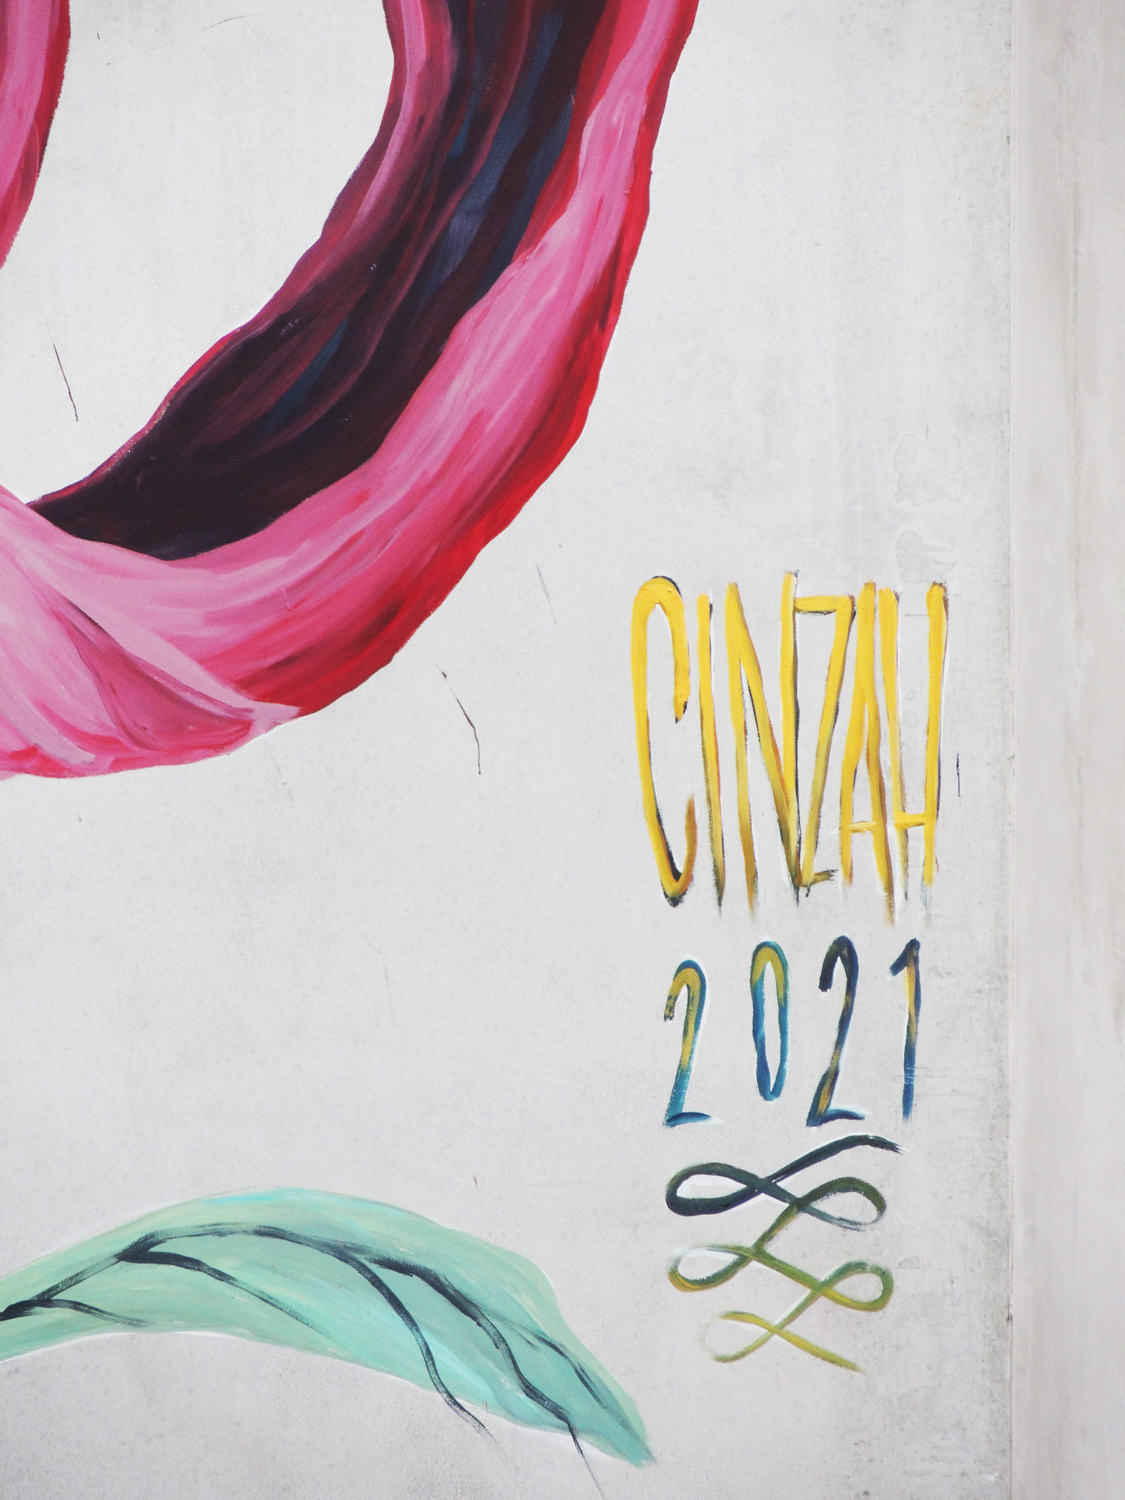 streetart Cinzah new zealand